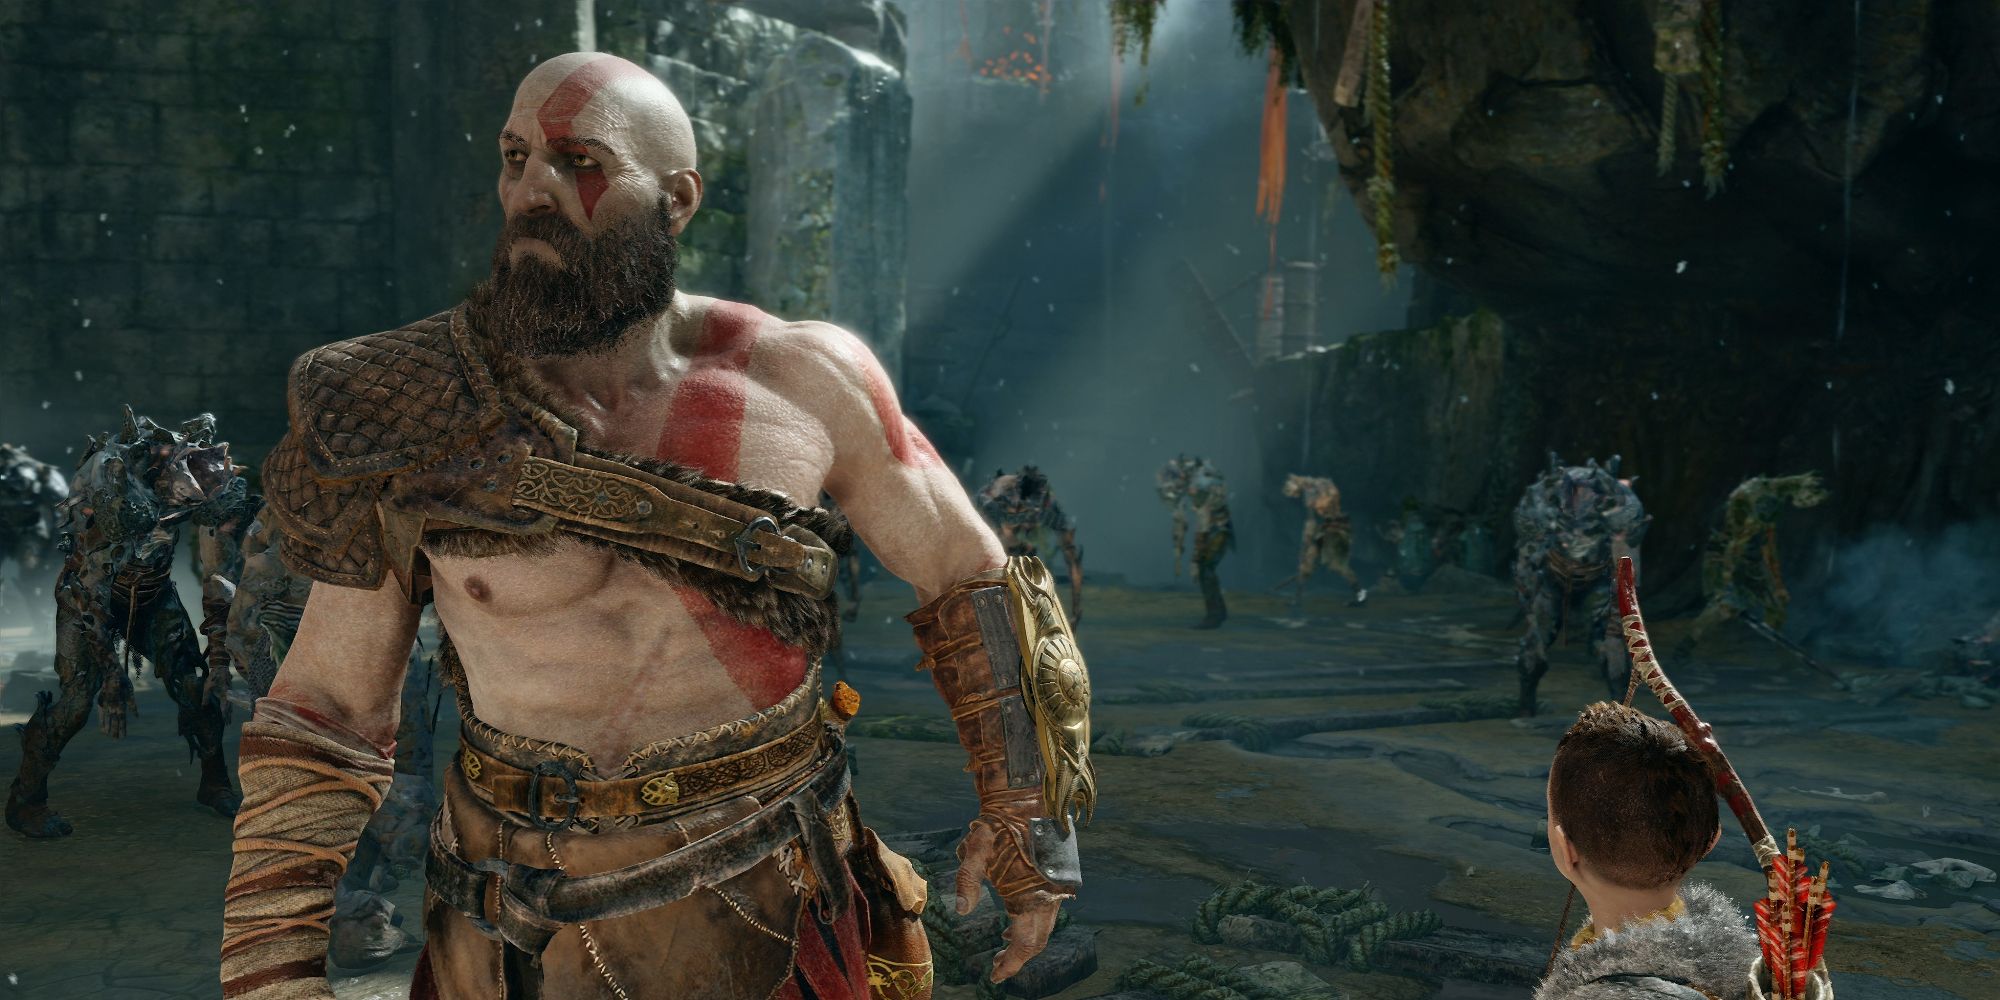 Kratos Looks Around At The Surrounding Figures